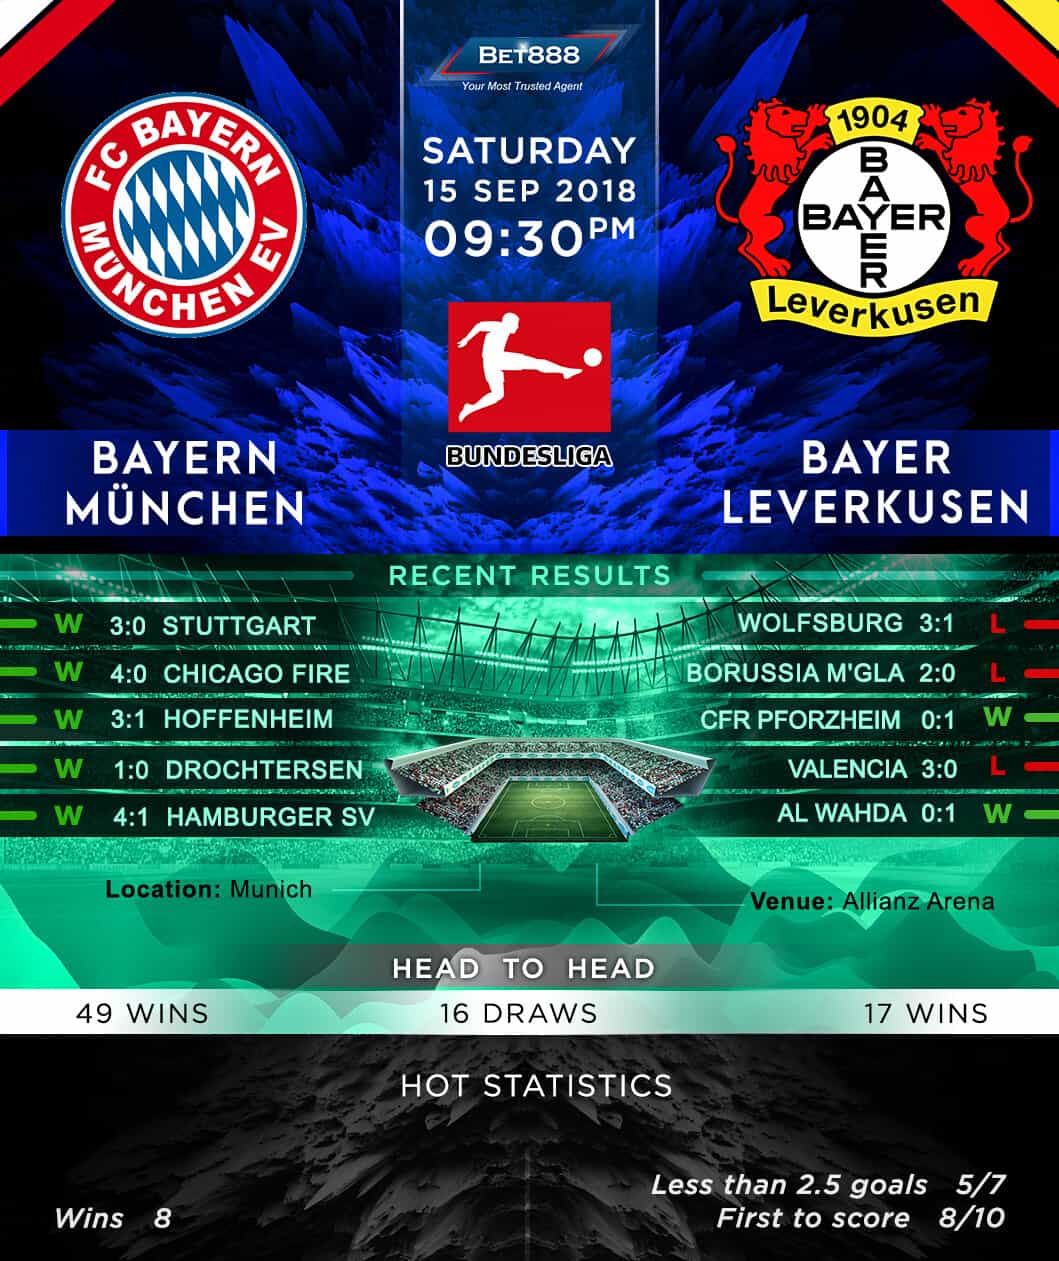 Bayern Munich vs Bayer Leverkusen 15/09/18